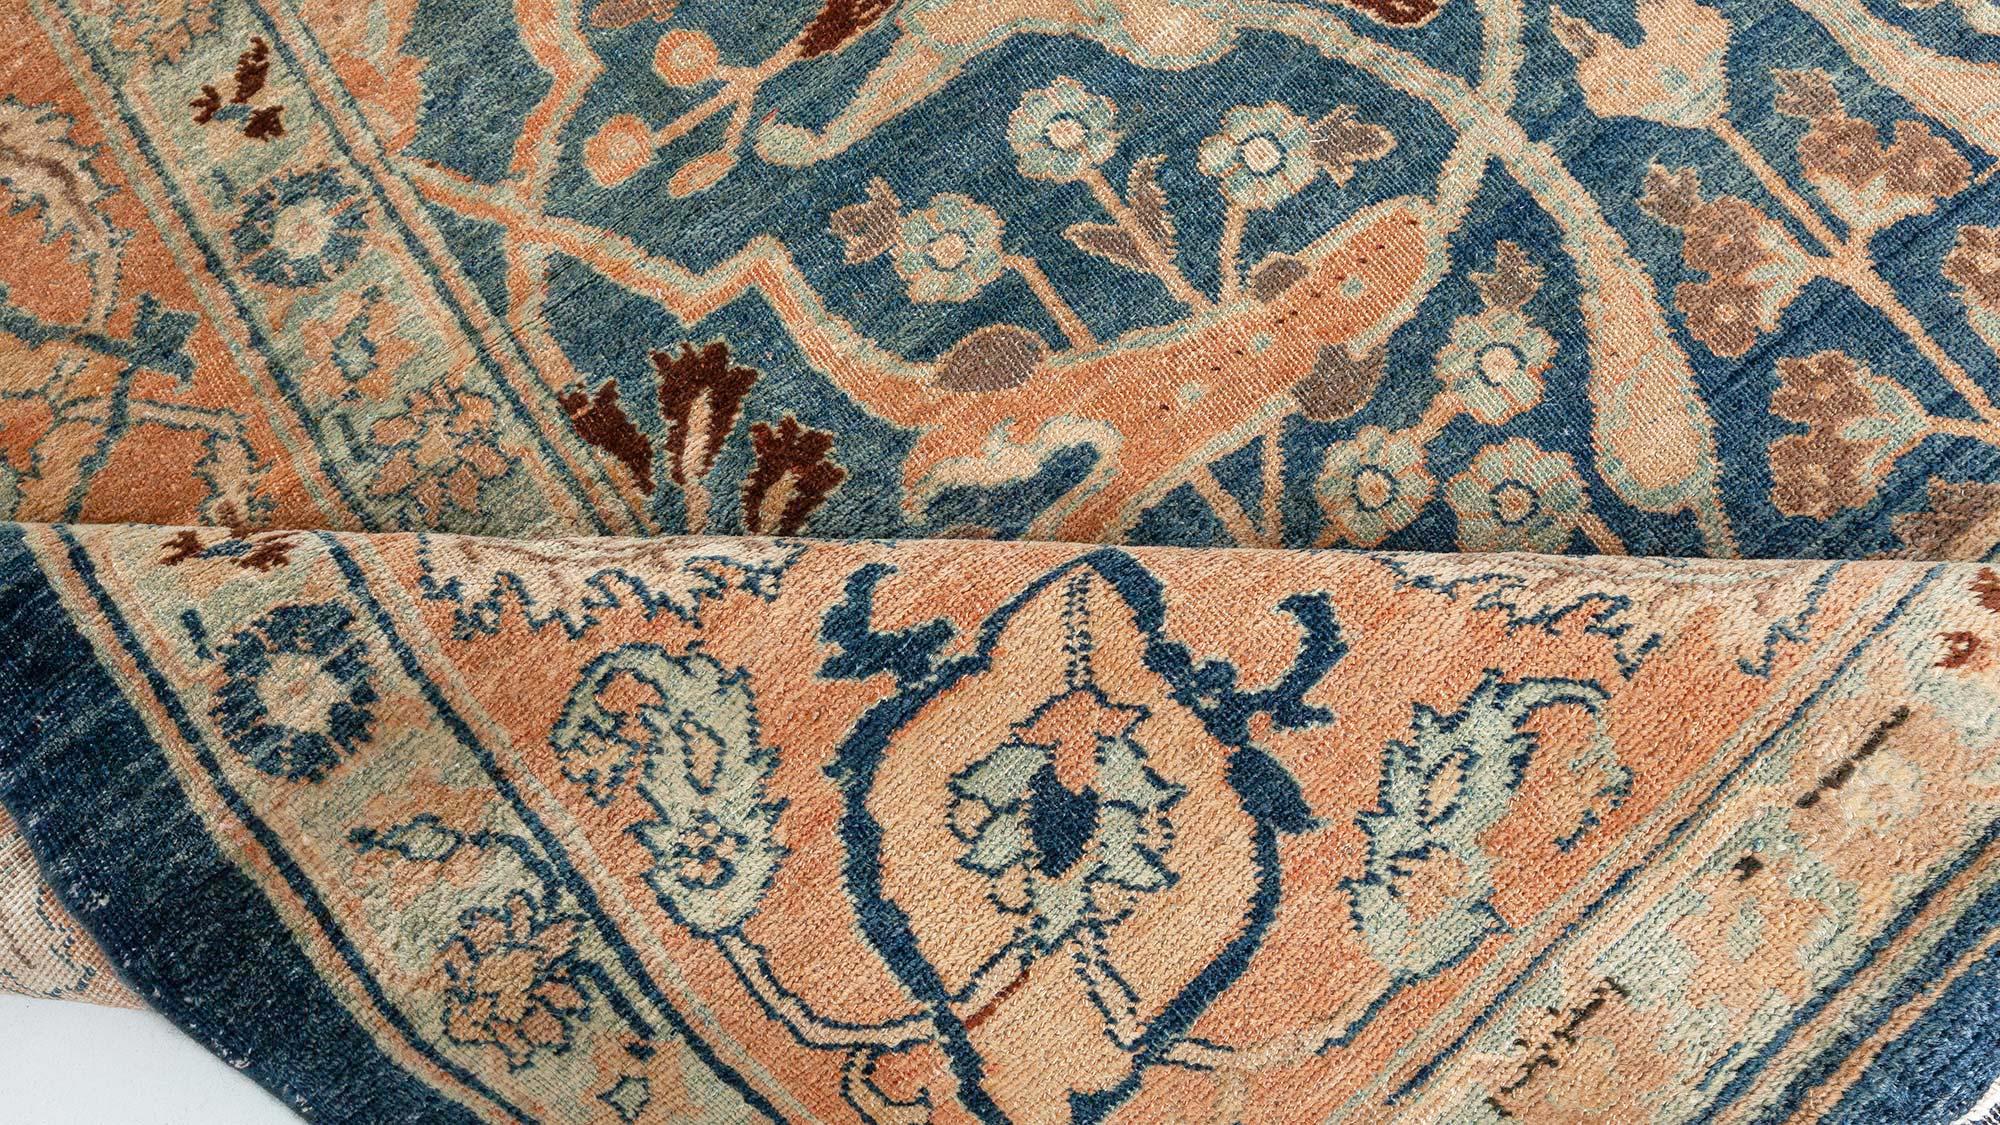 19th Century Persian Tabriz Handmade Wool Carpet For Sale 1